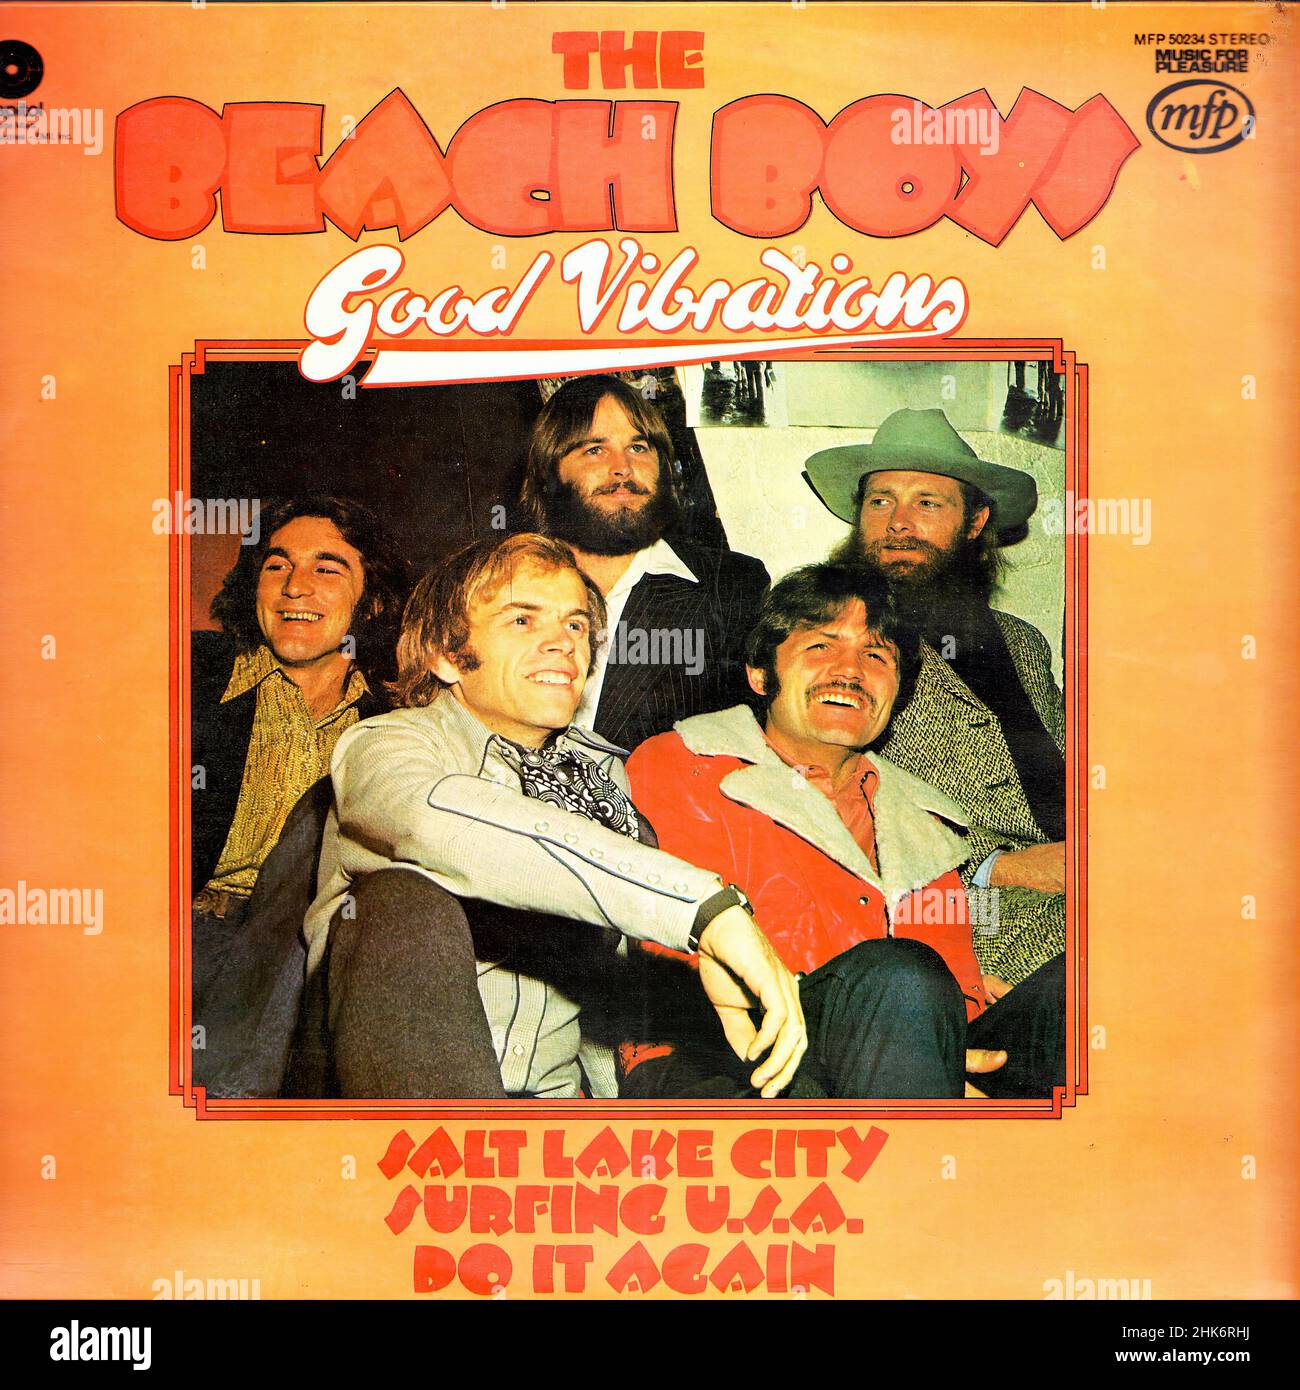 Vintage vinyl record cover -  Beach Boys, The - Good Vibration - UK - 1975 Stock Photo